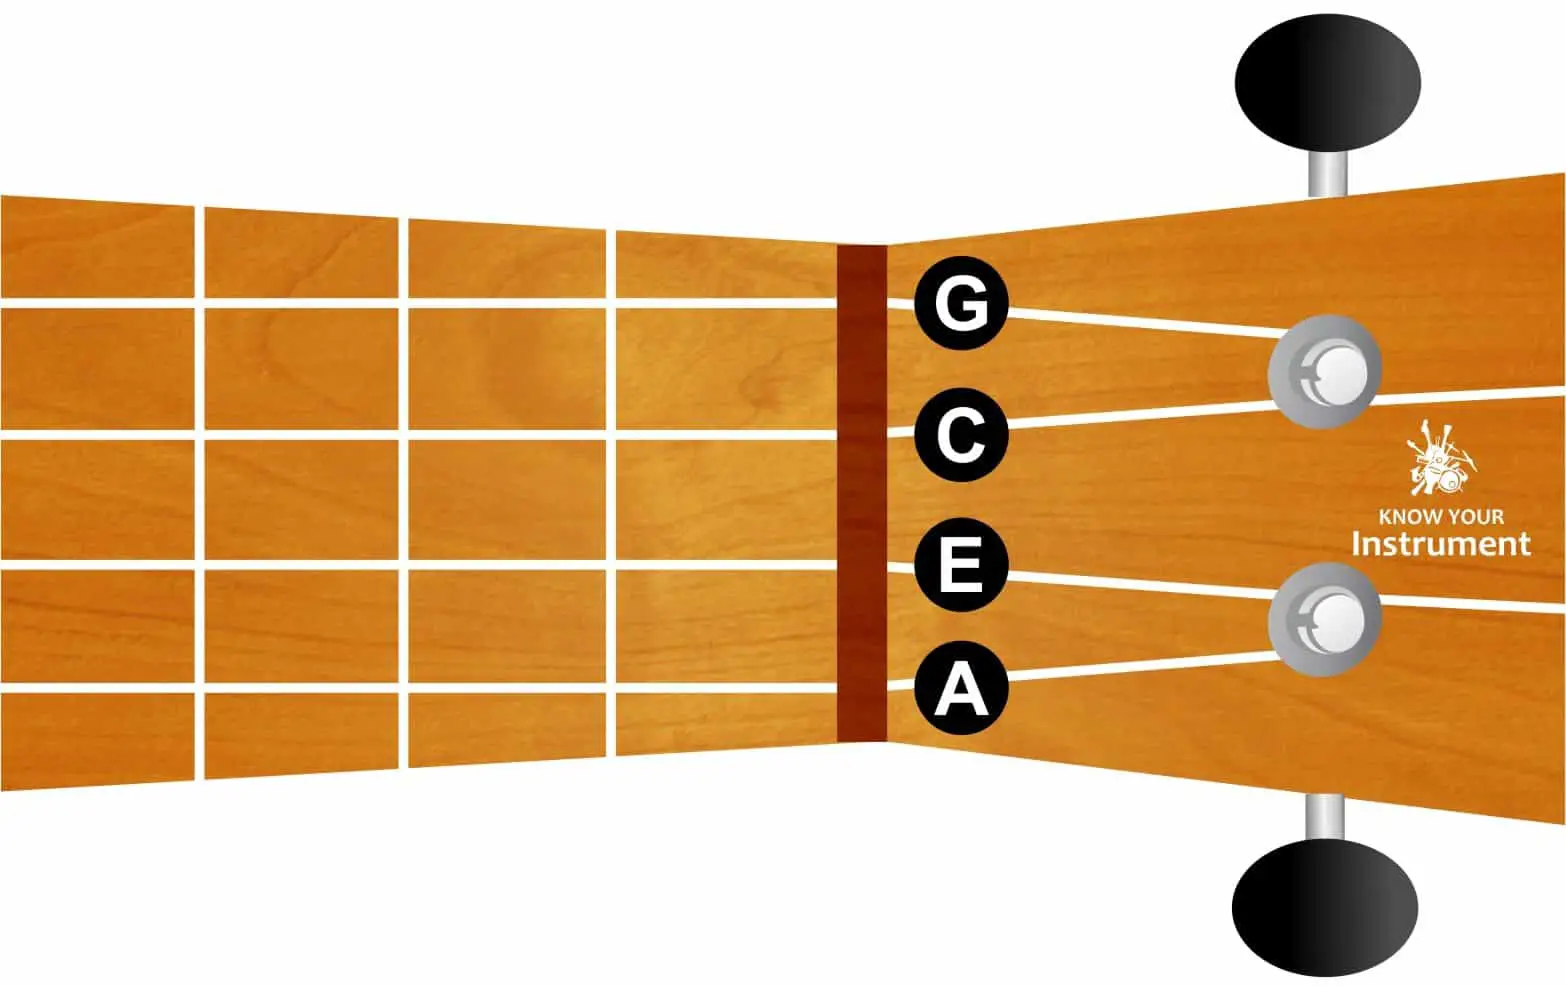 ukulele string names - Know Your Instrument